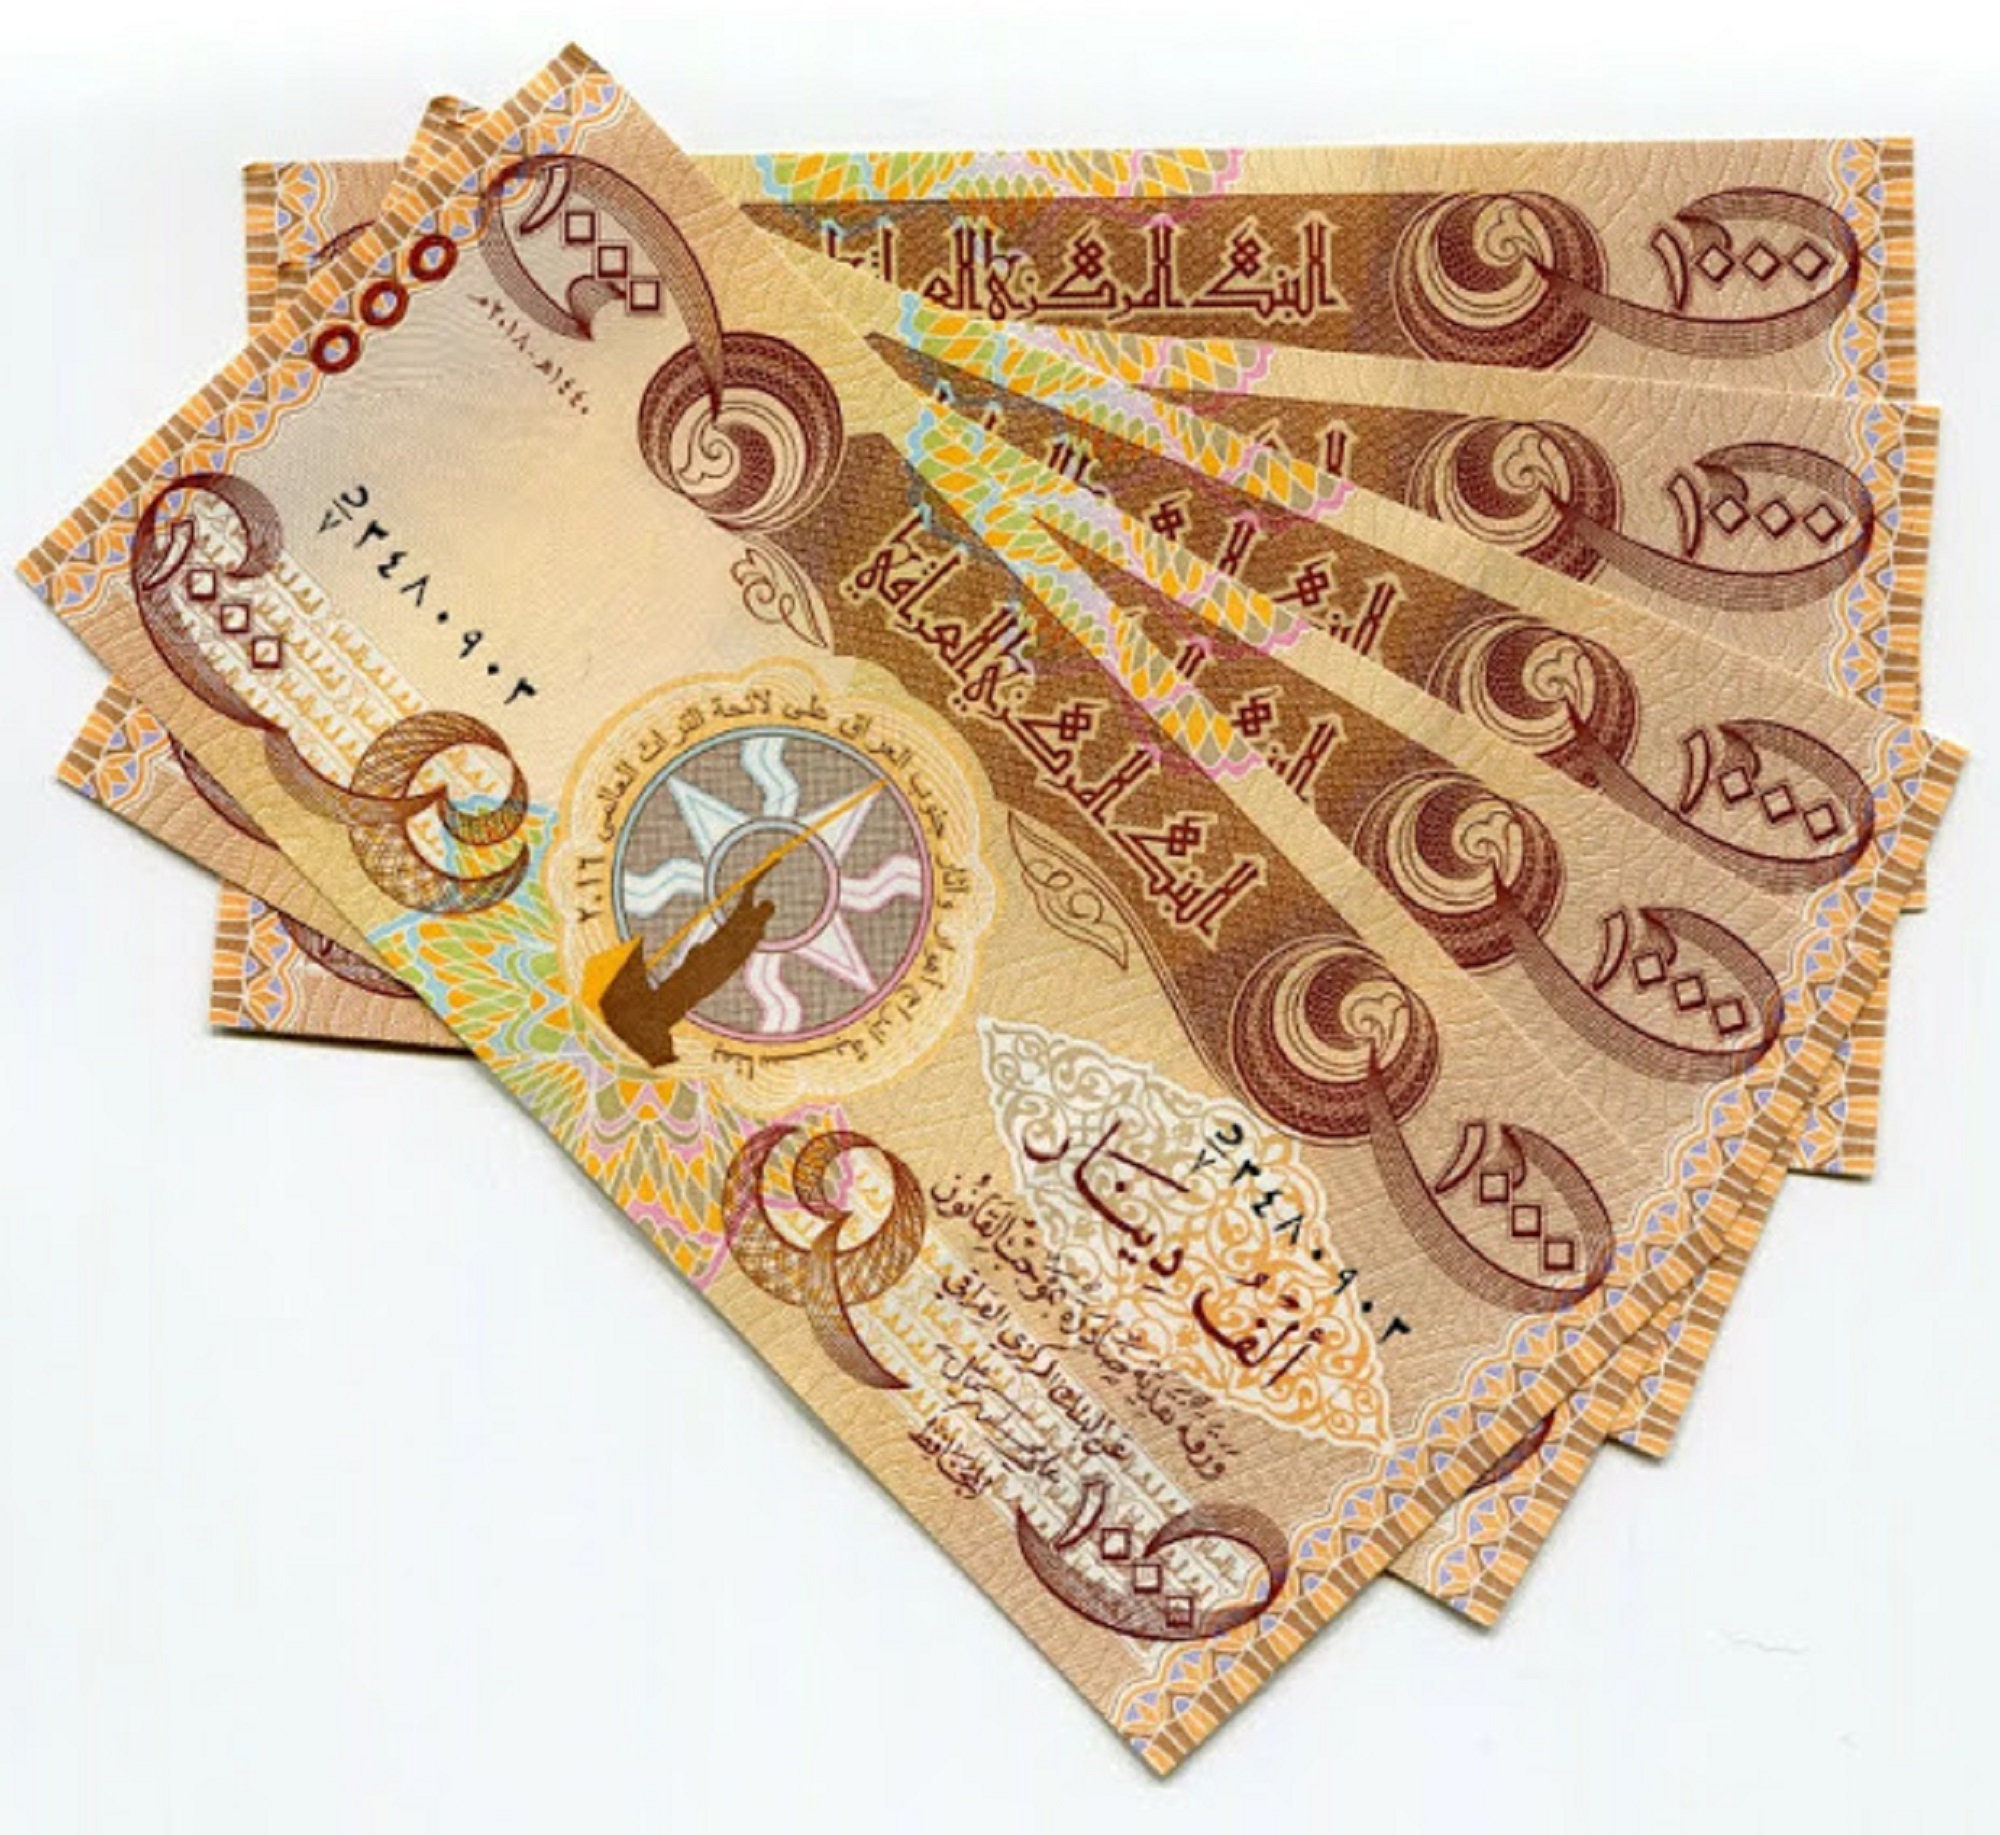 Iraqi Dinar Banknotes Fast Ship! 25,000 Circulated 5 x 5,000 IQD! 